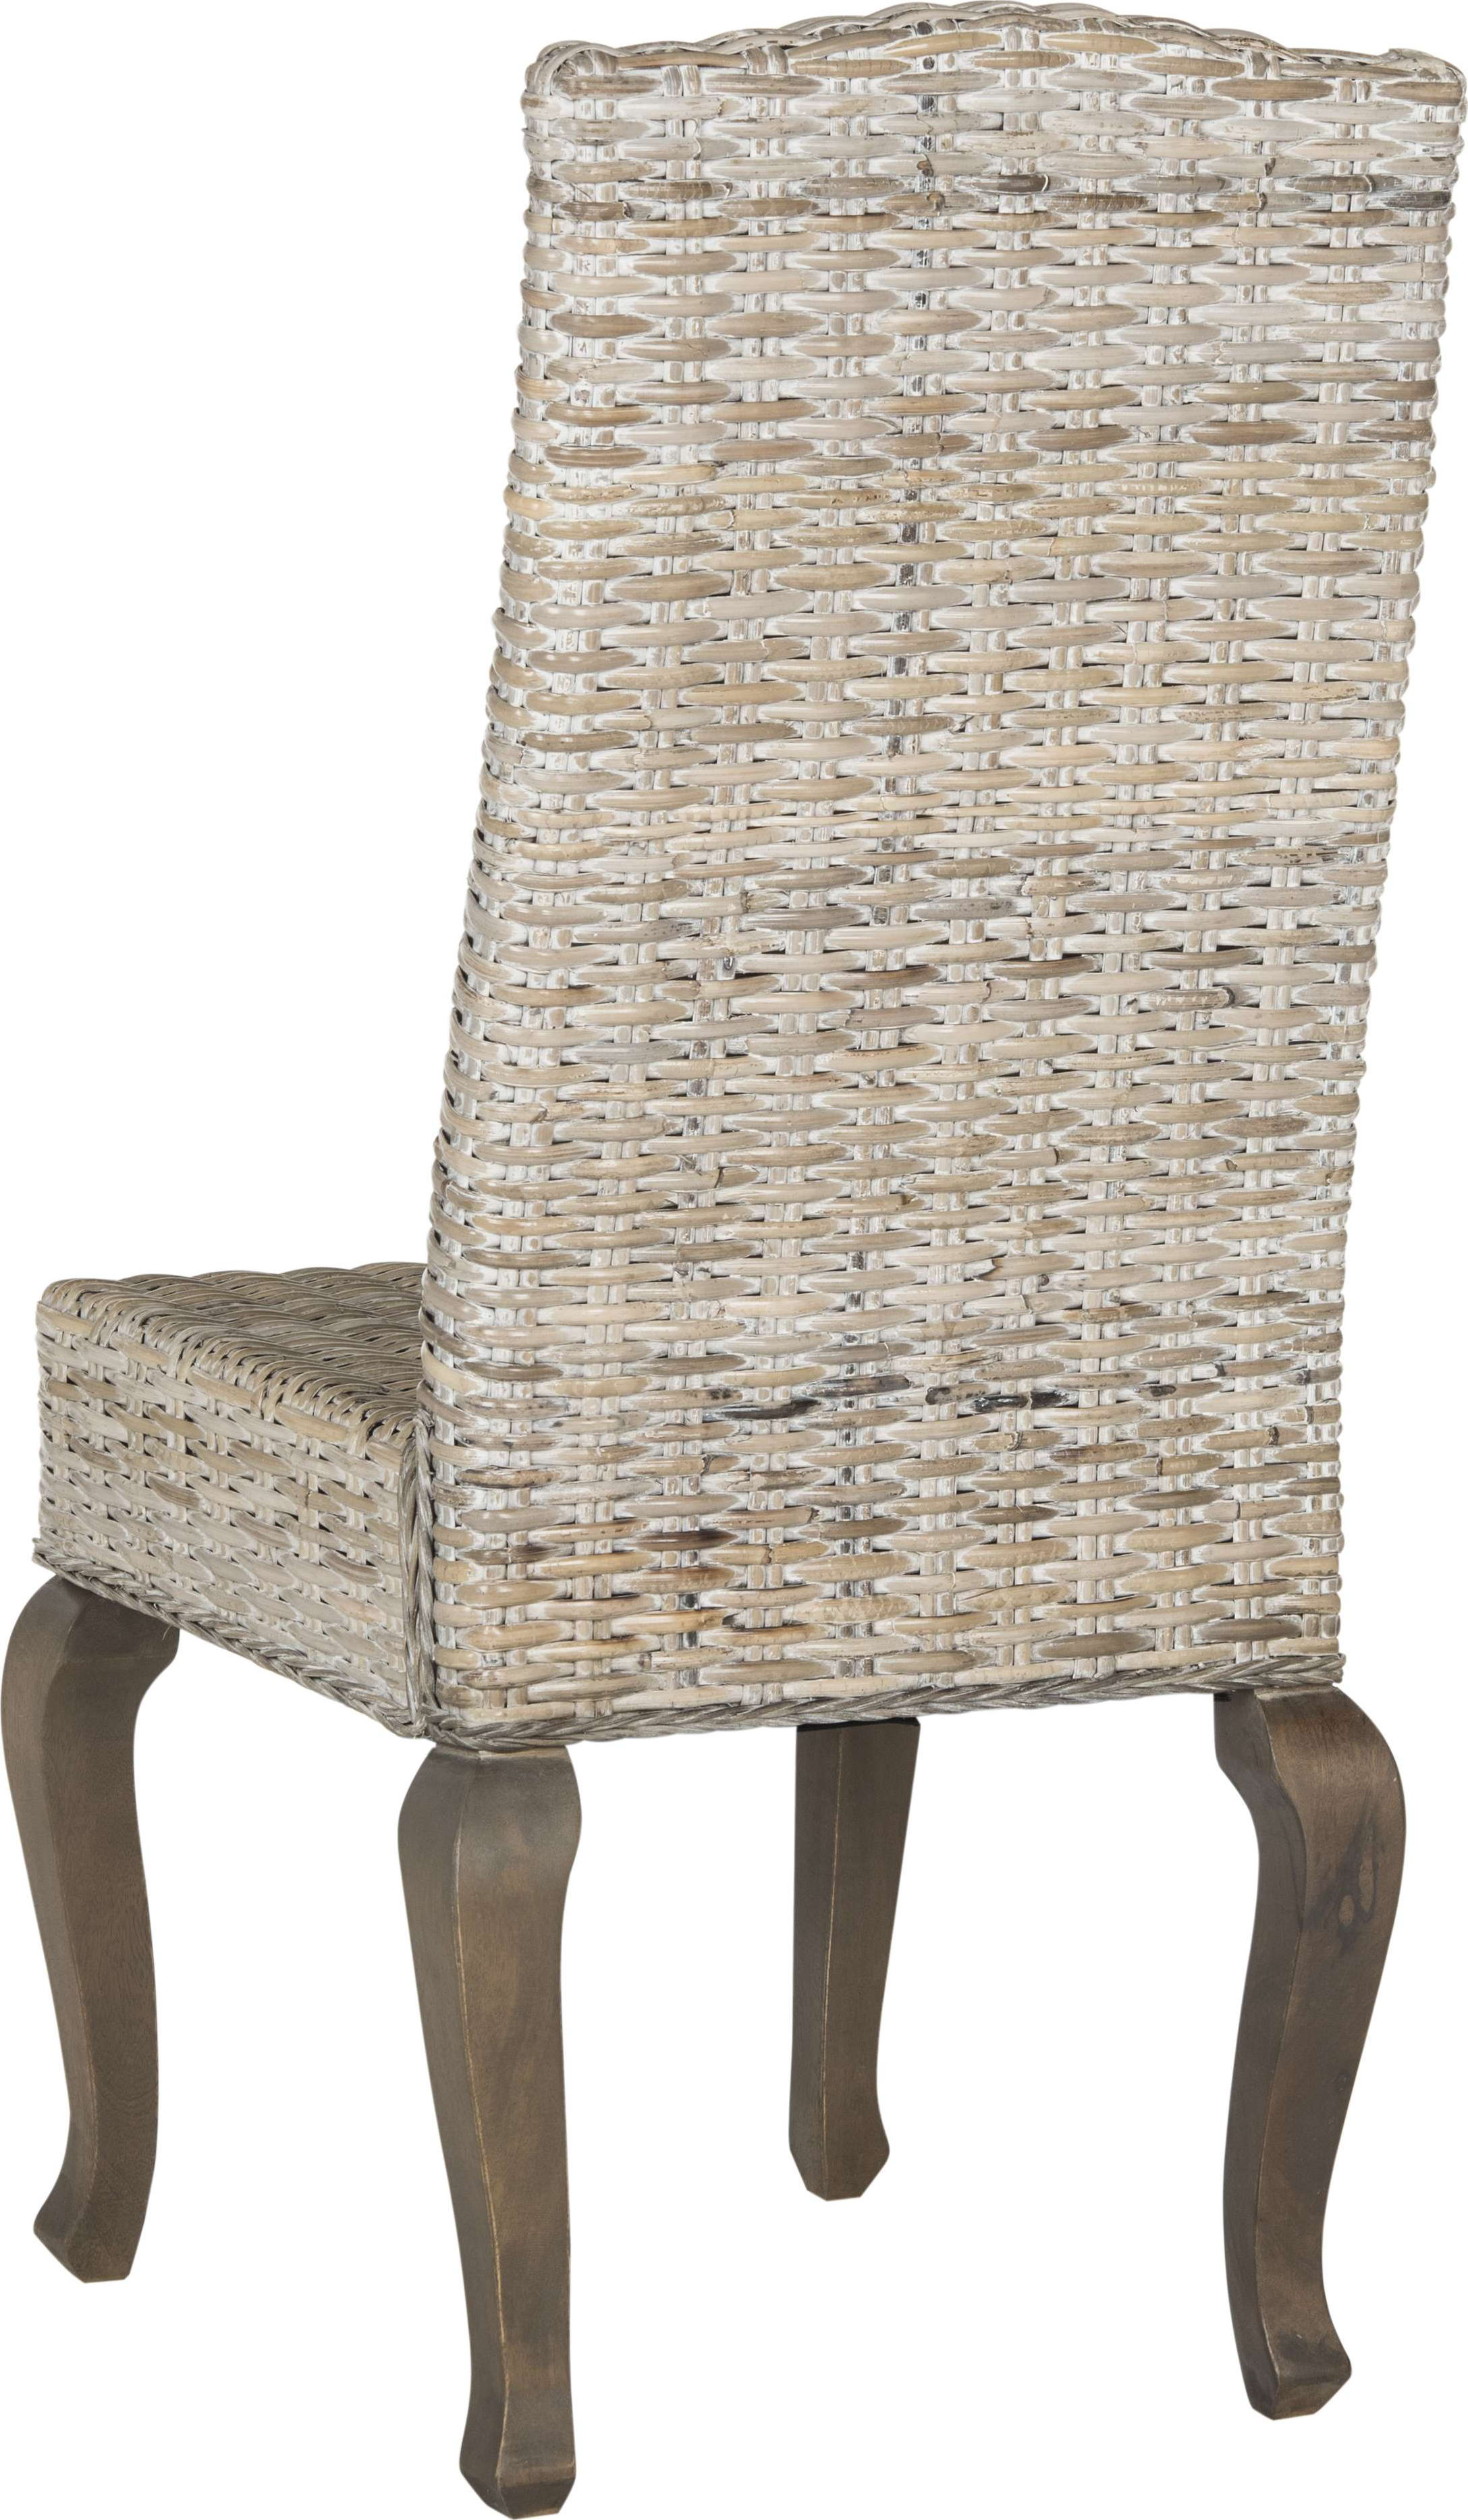 Milos White Wash 18" Wicker Dining Chair (Set of 2) K7743